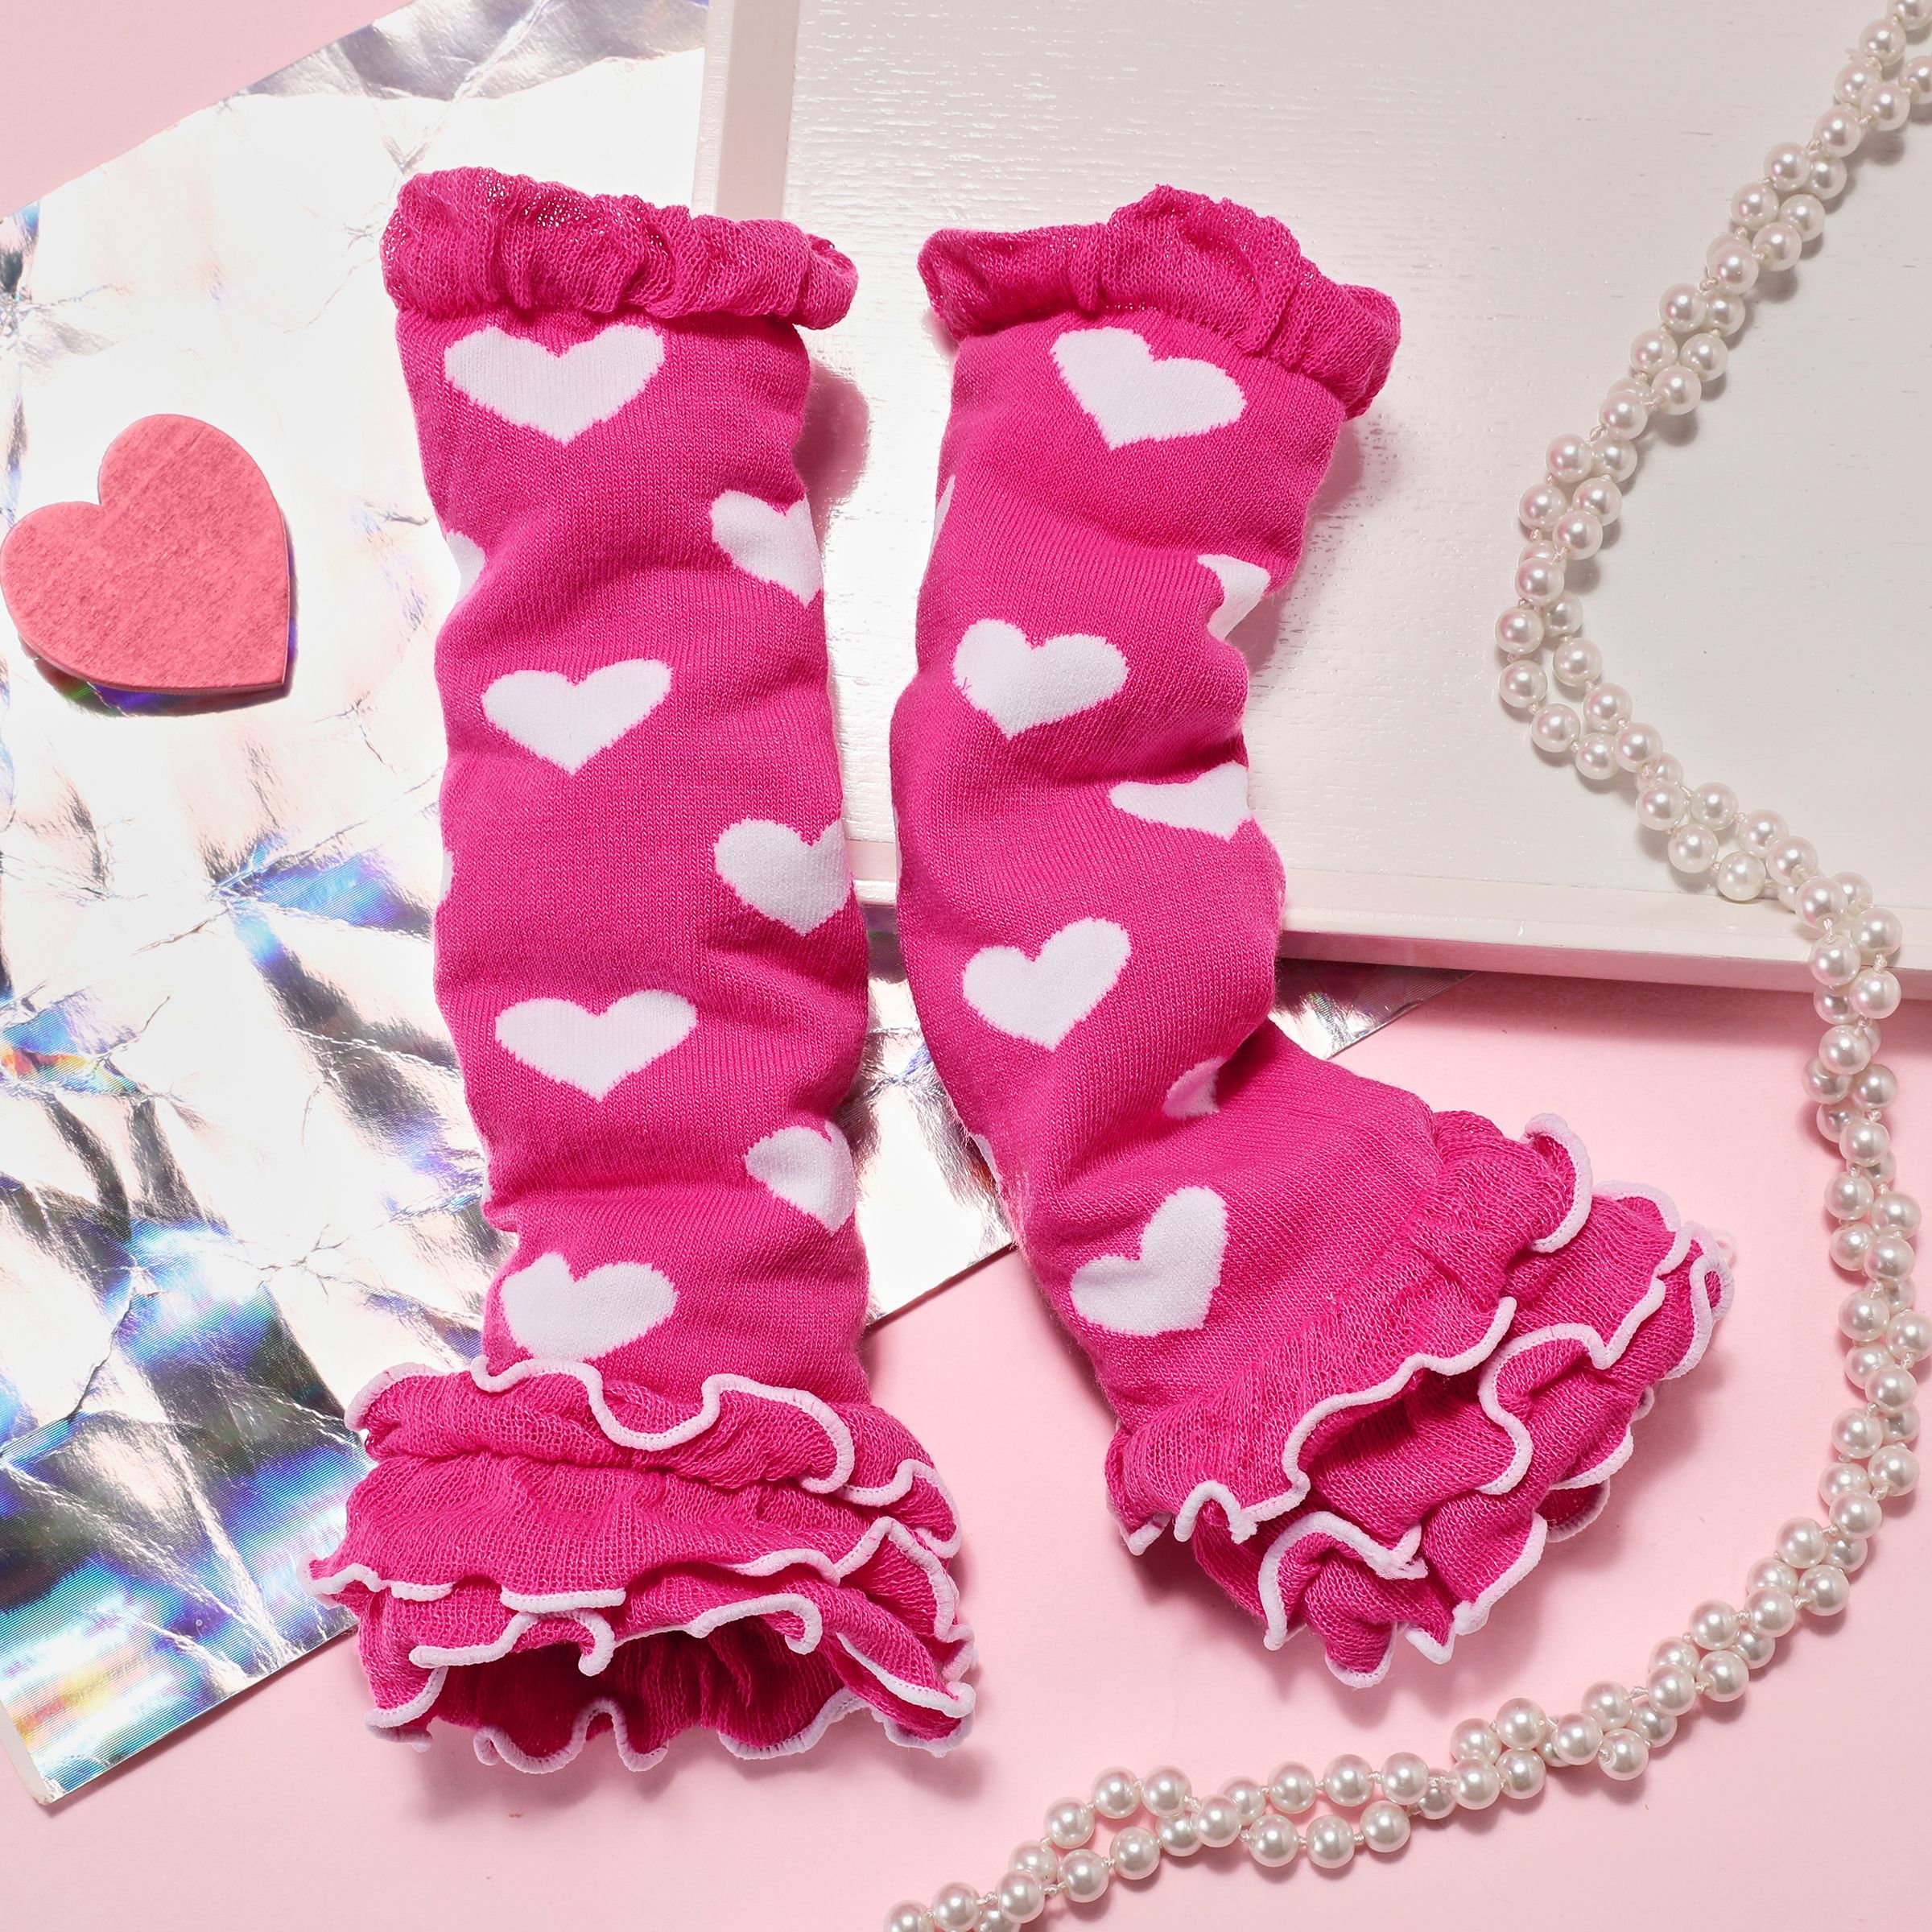 

Baby Cute and Stylish Heart-shaped Socks